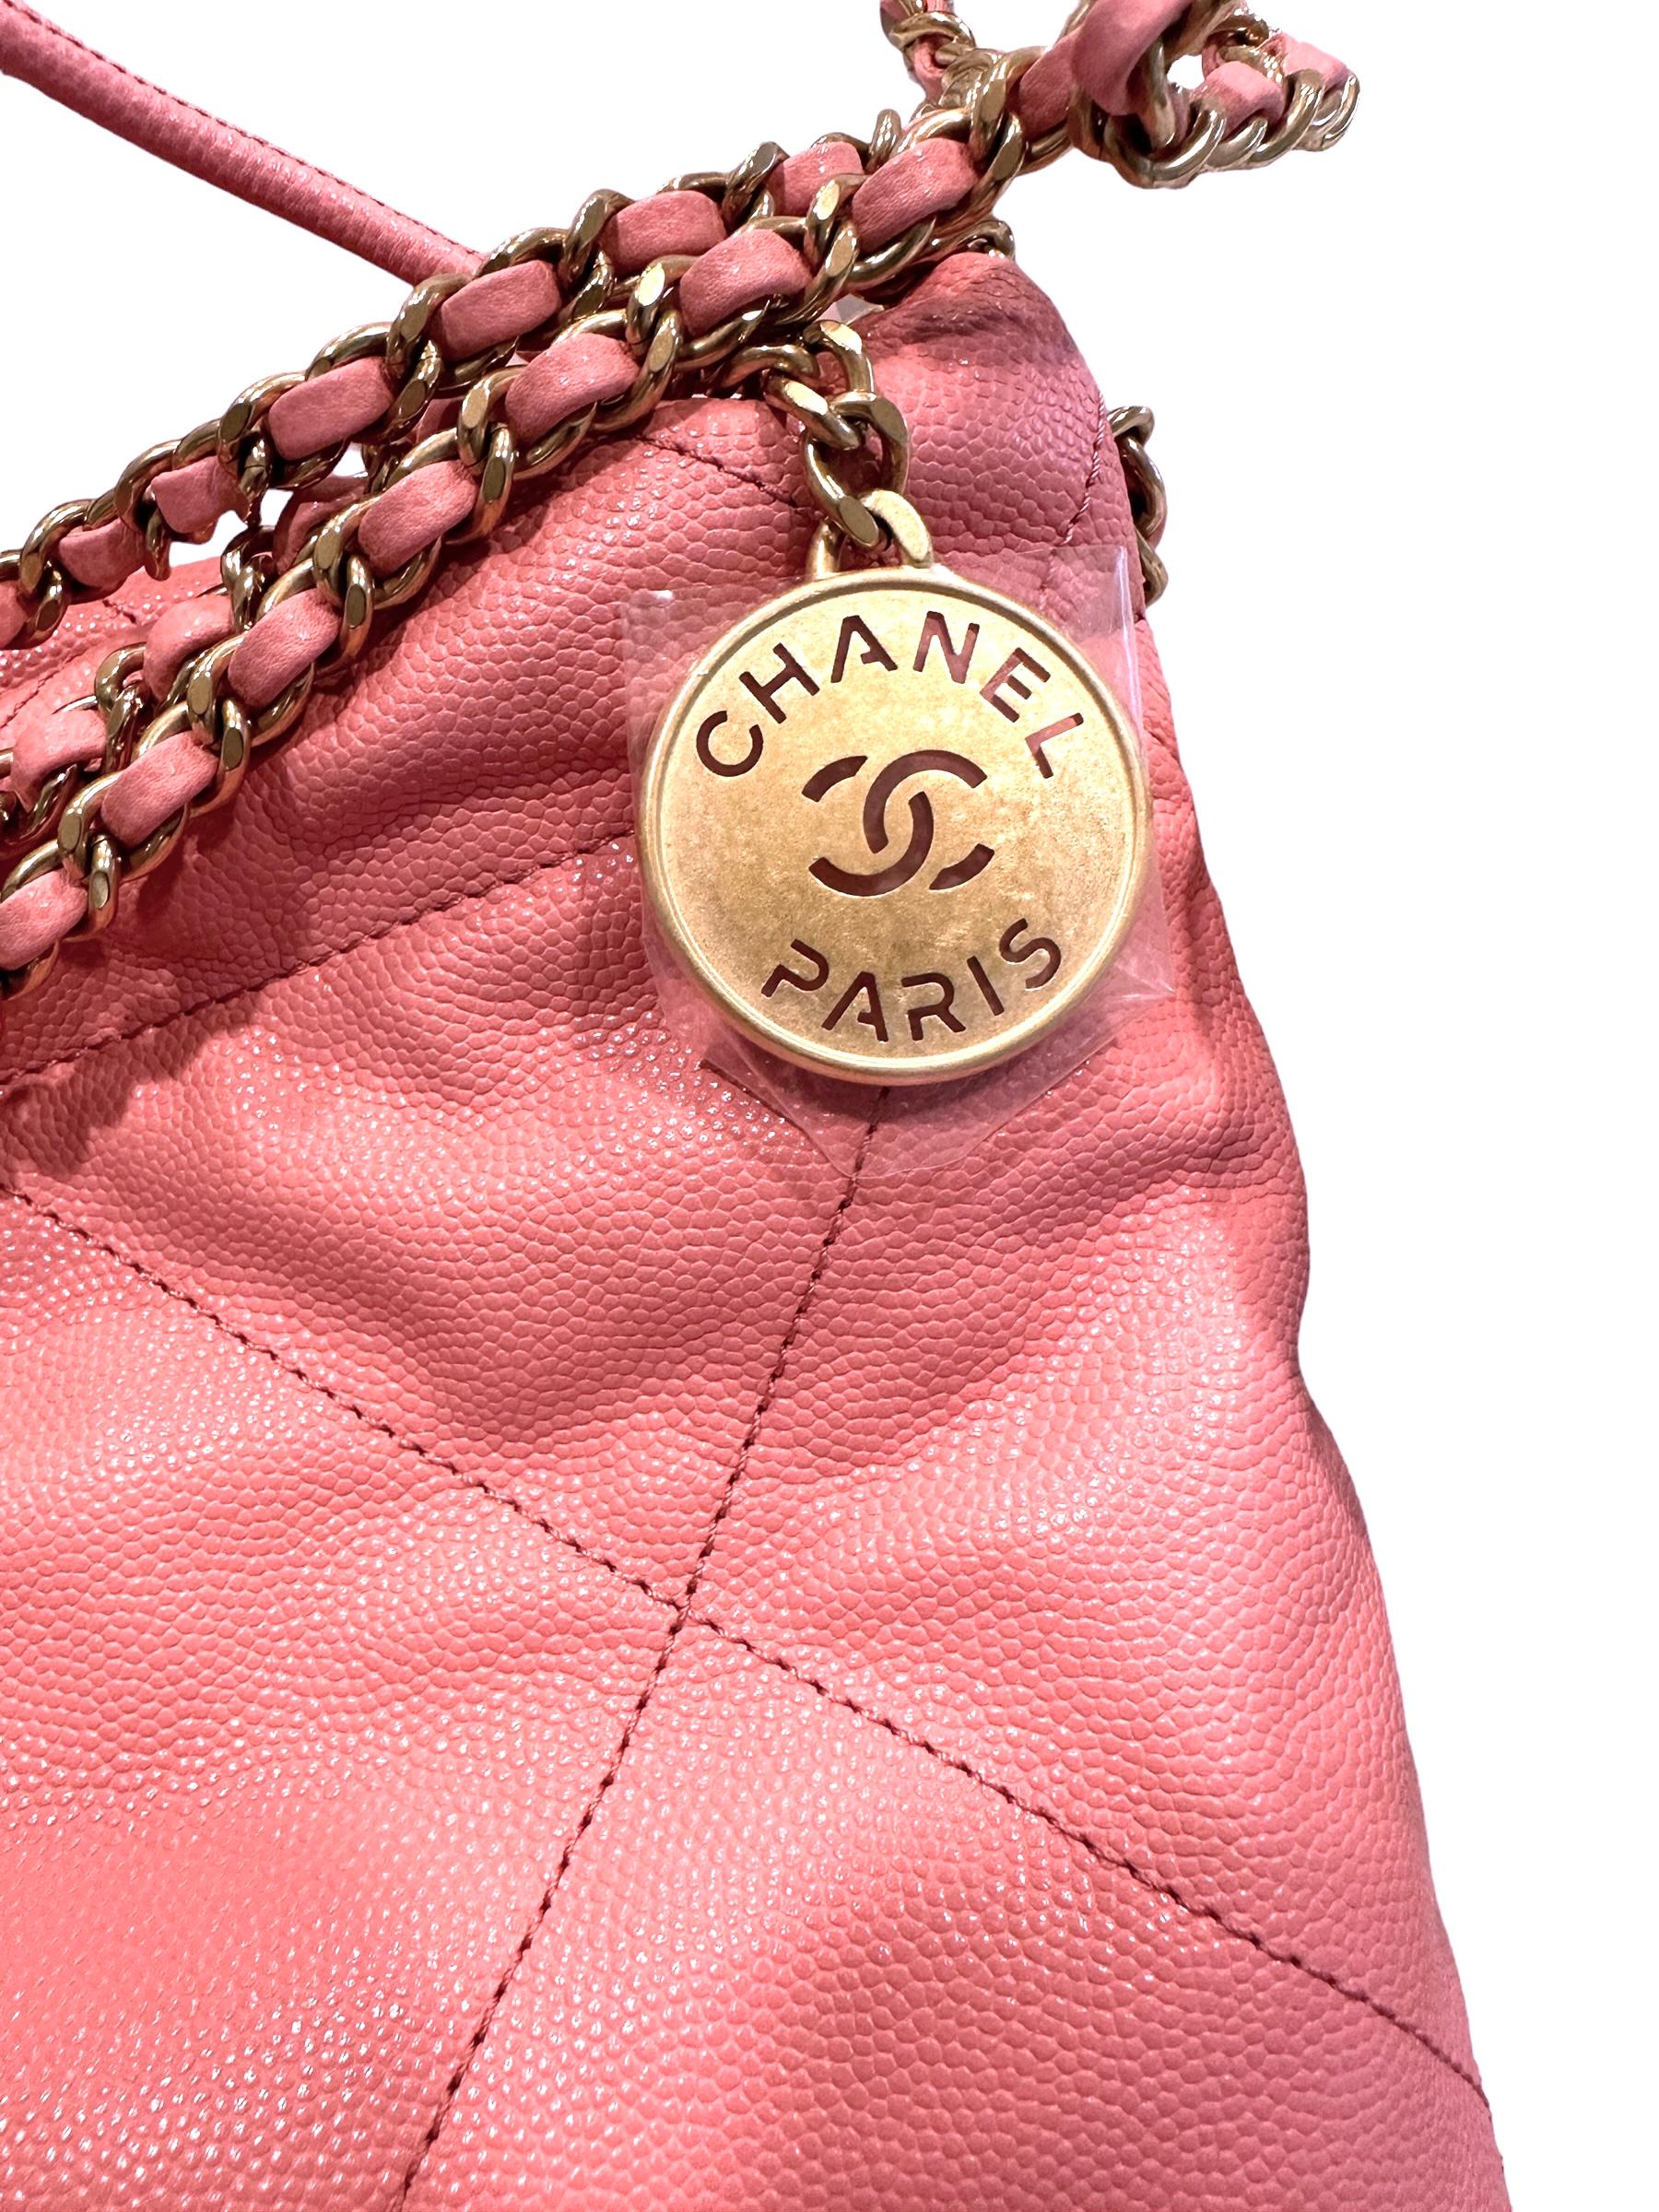 CHANEL 22 Mini Handbag Pink Coral Goldtone NEW 9